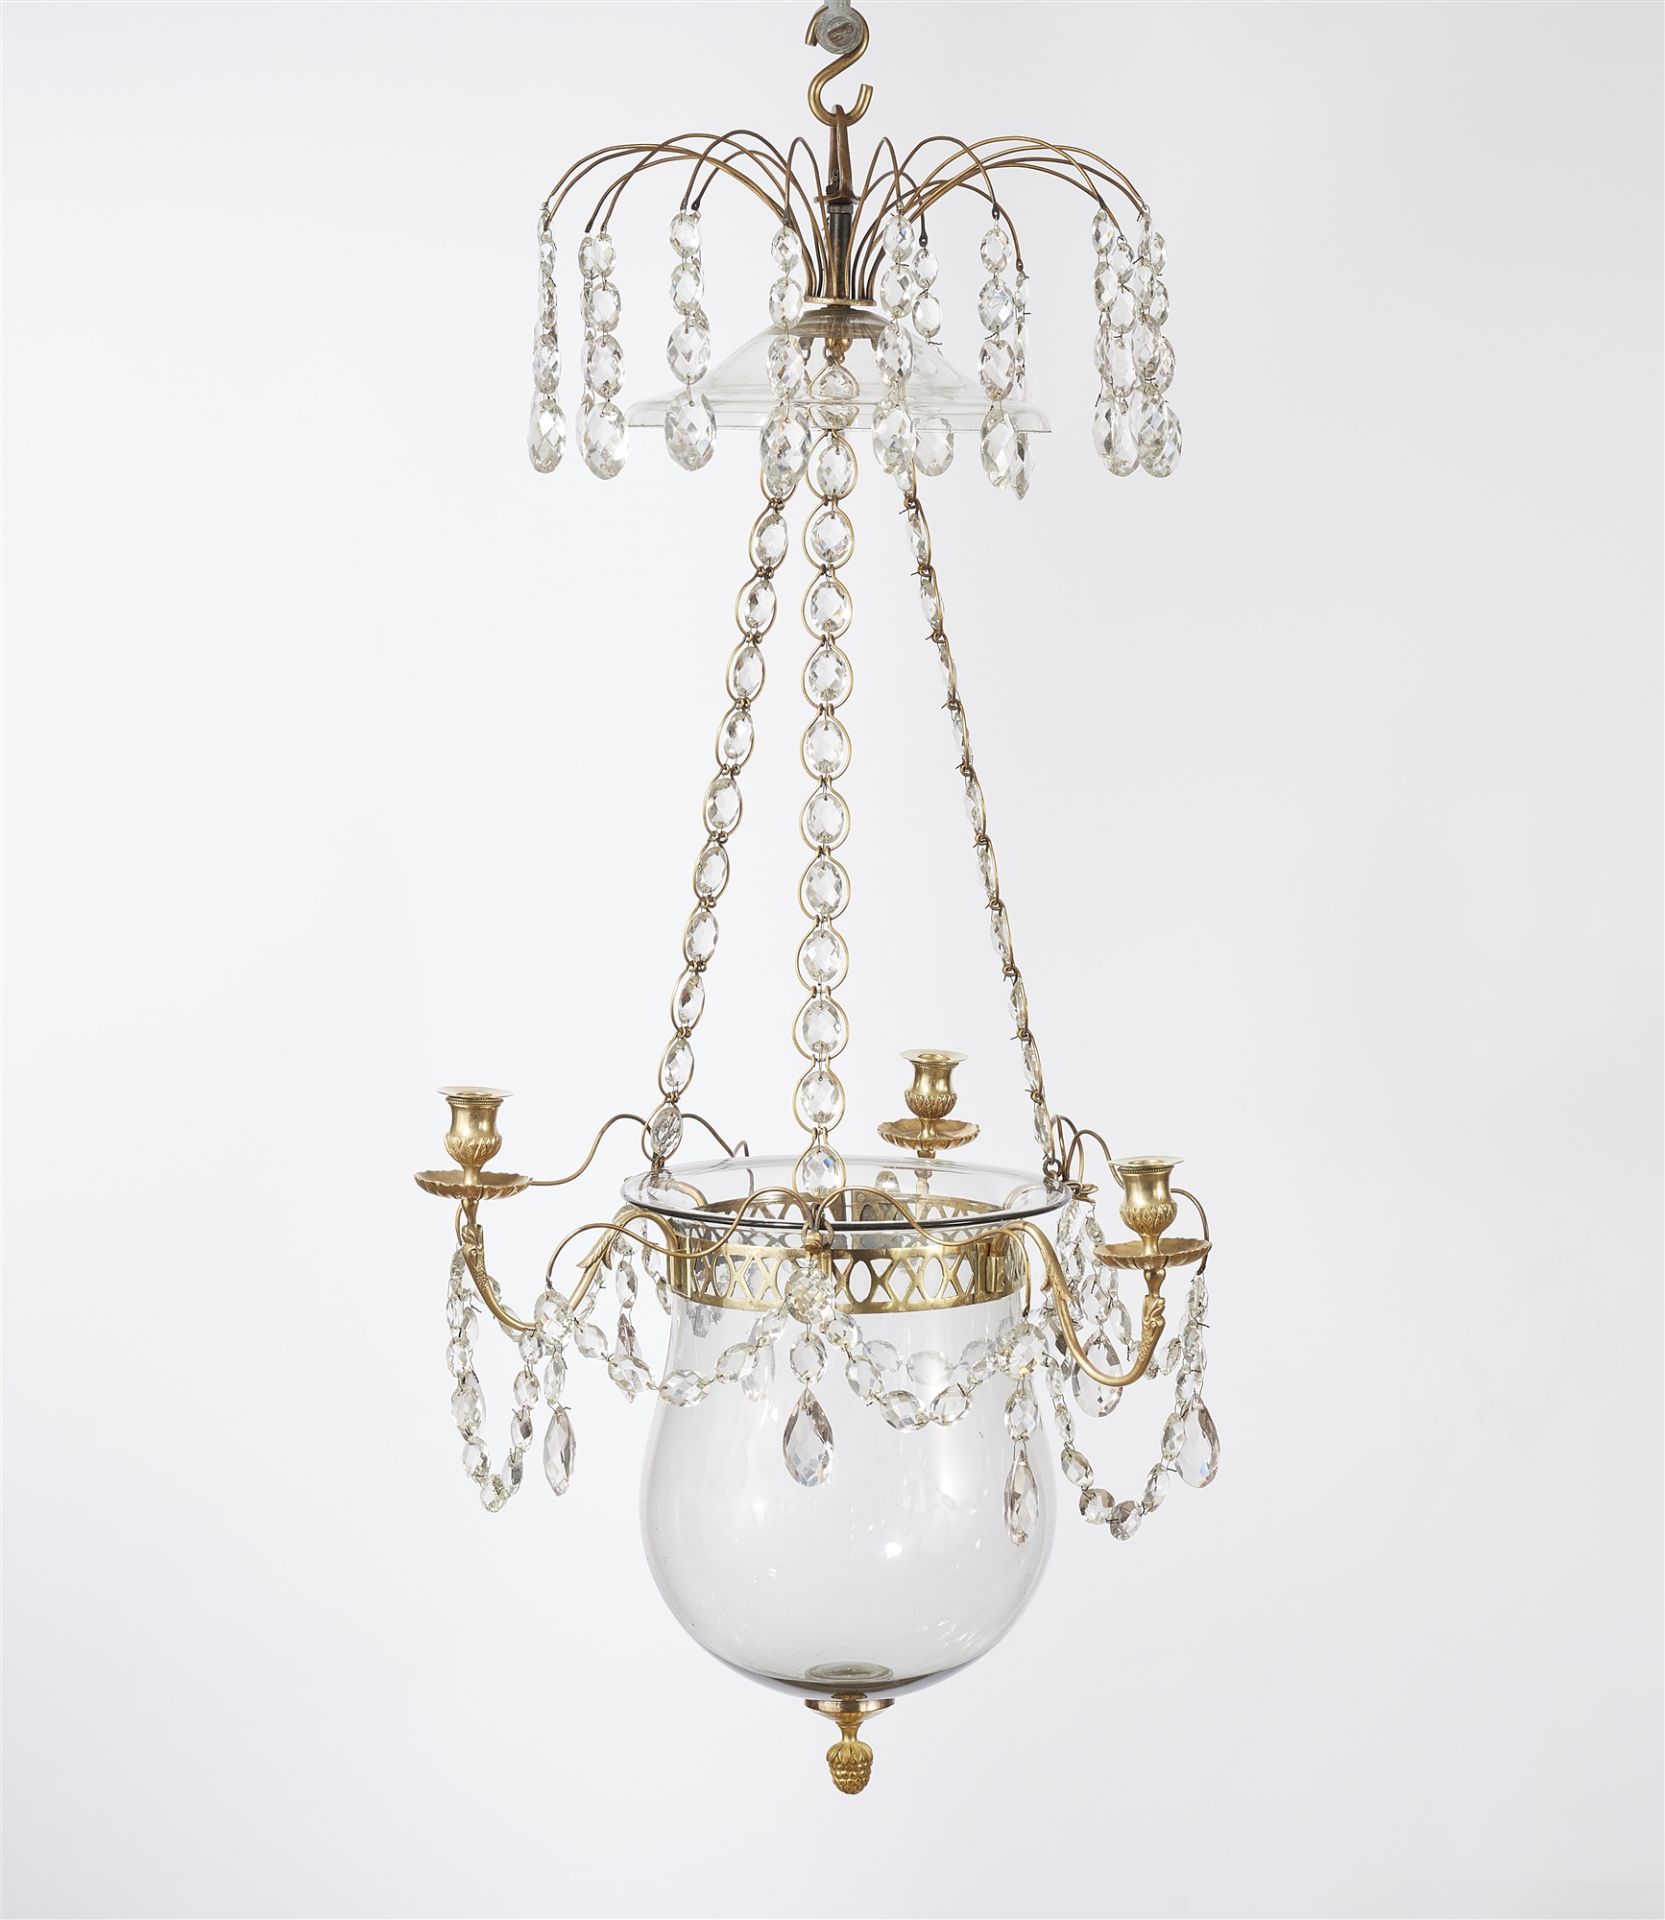 A brass three-flame chandelier